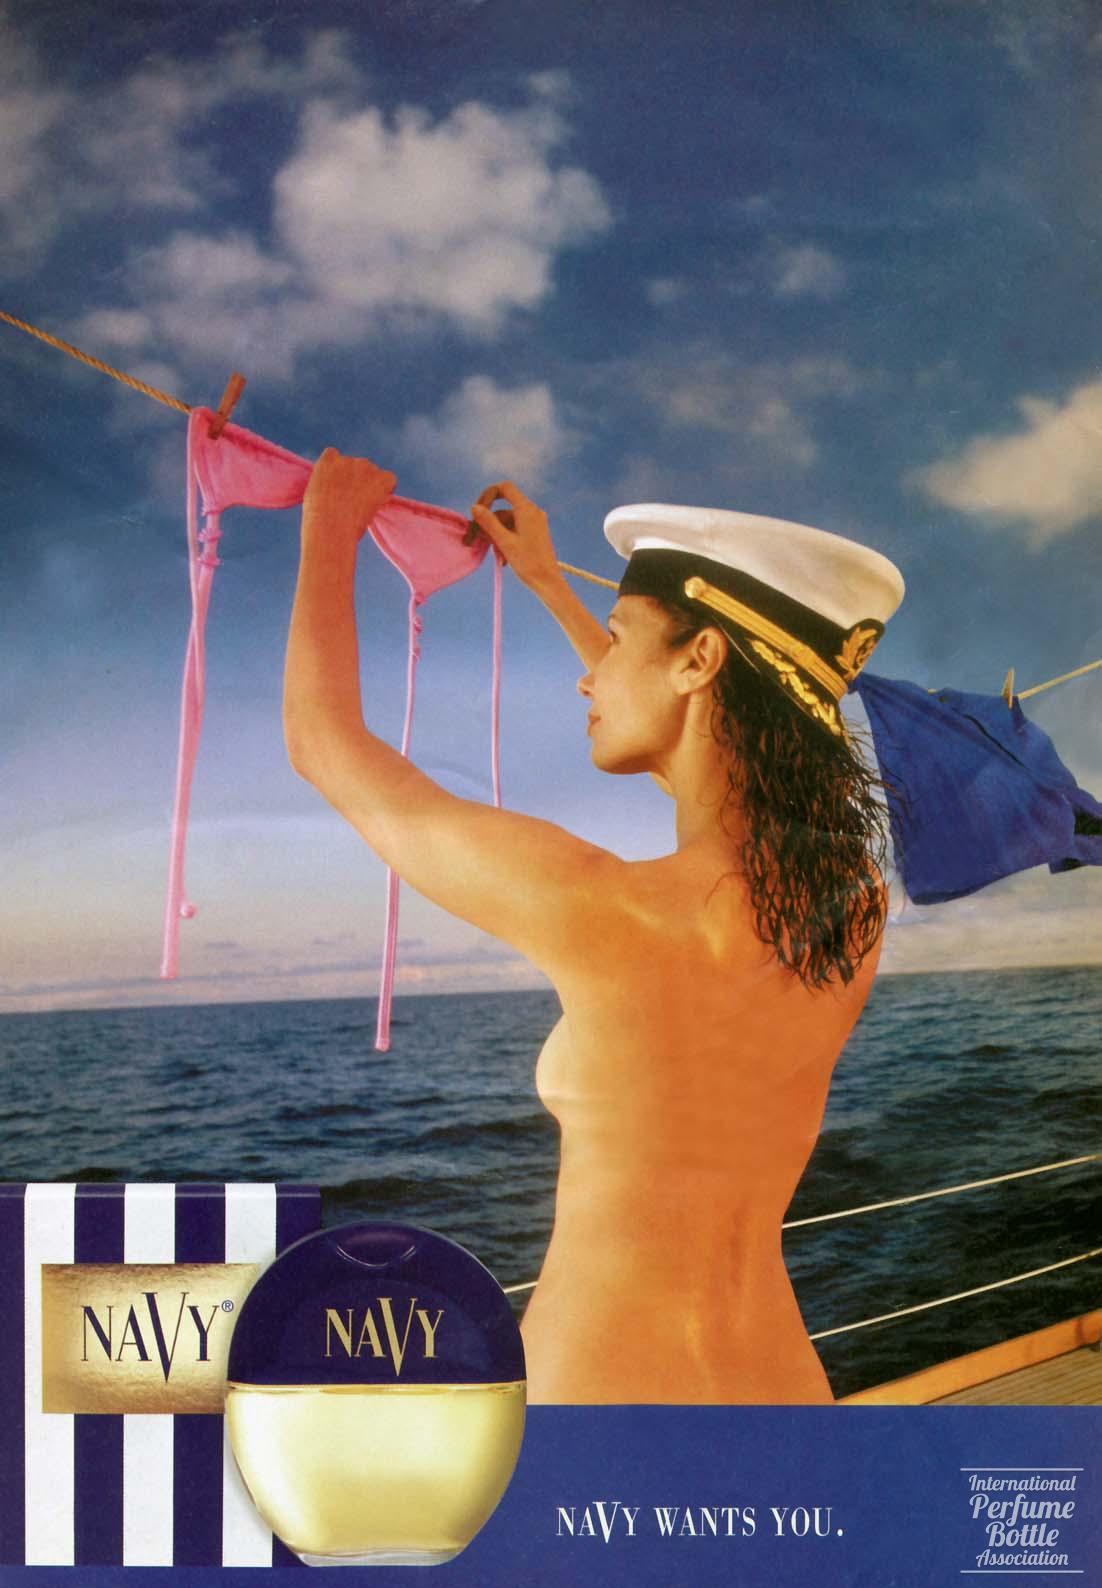 "Navy" by Dana Advertisement - 2000